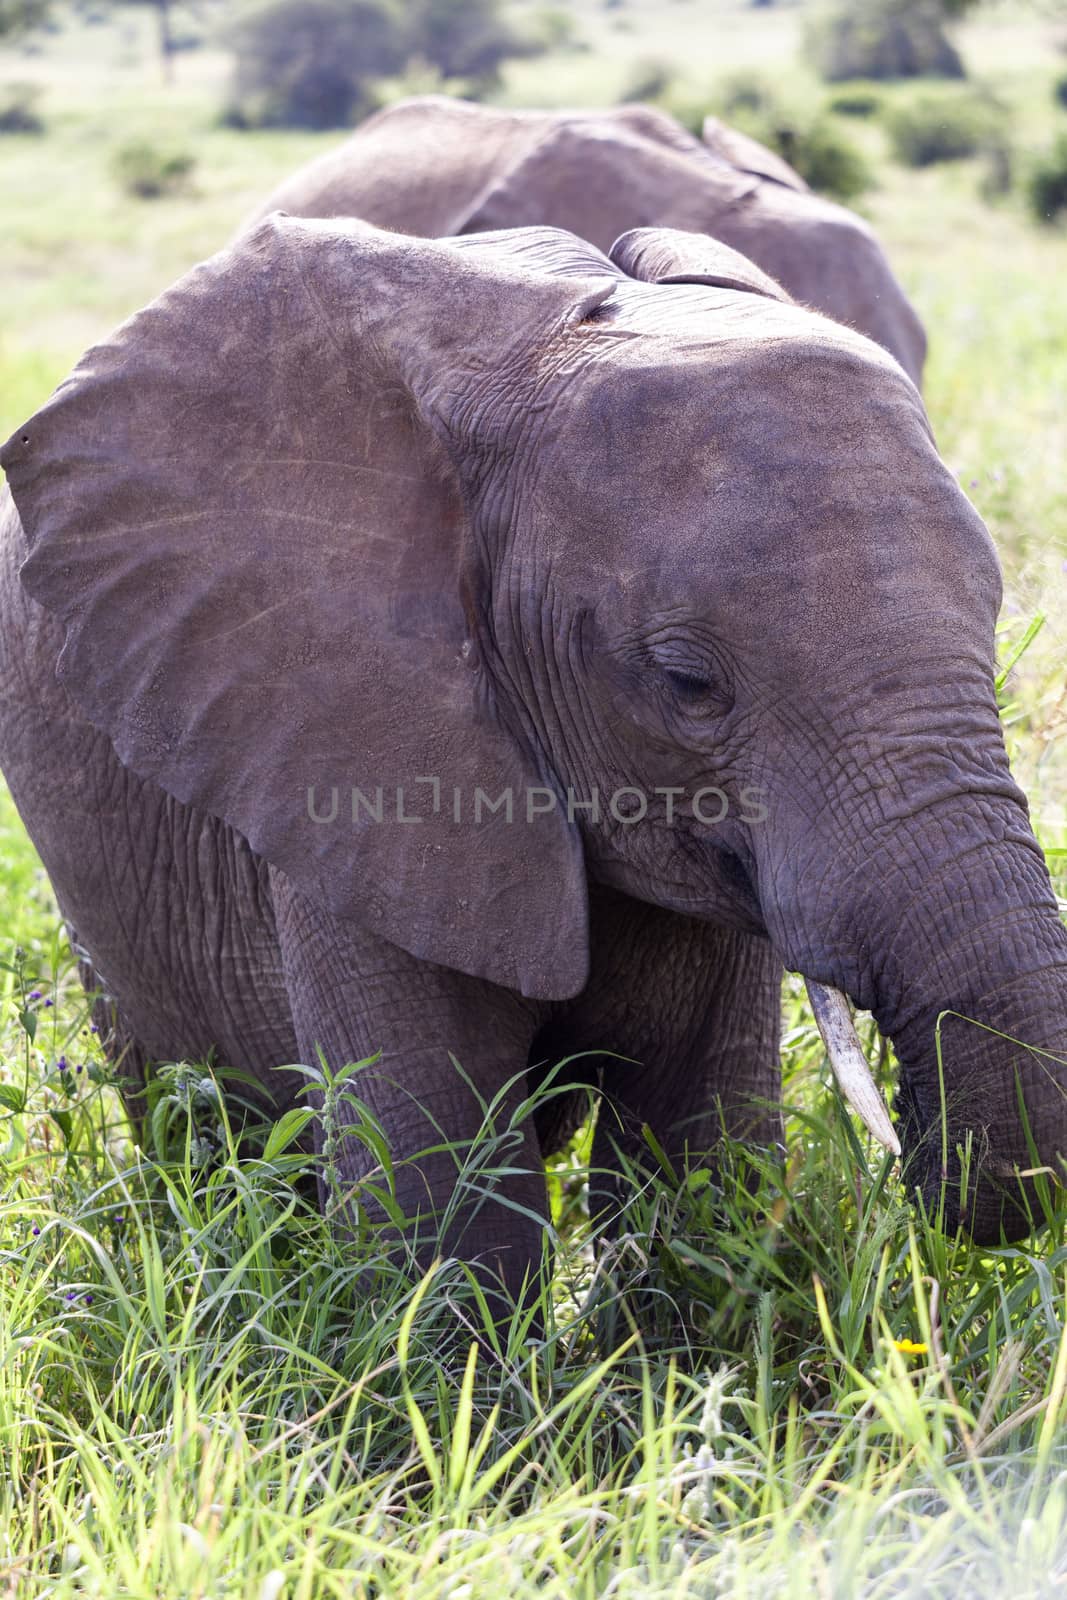 African Elephants by Imagecom